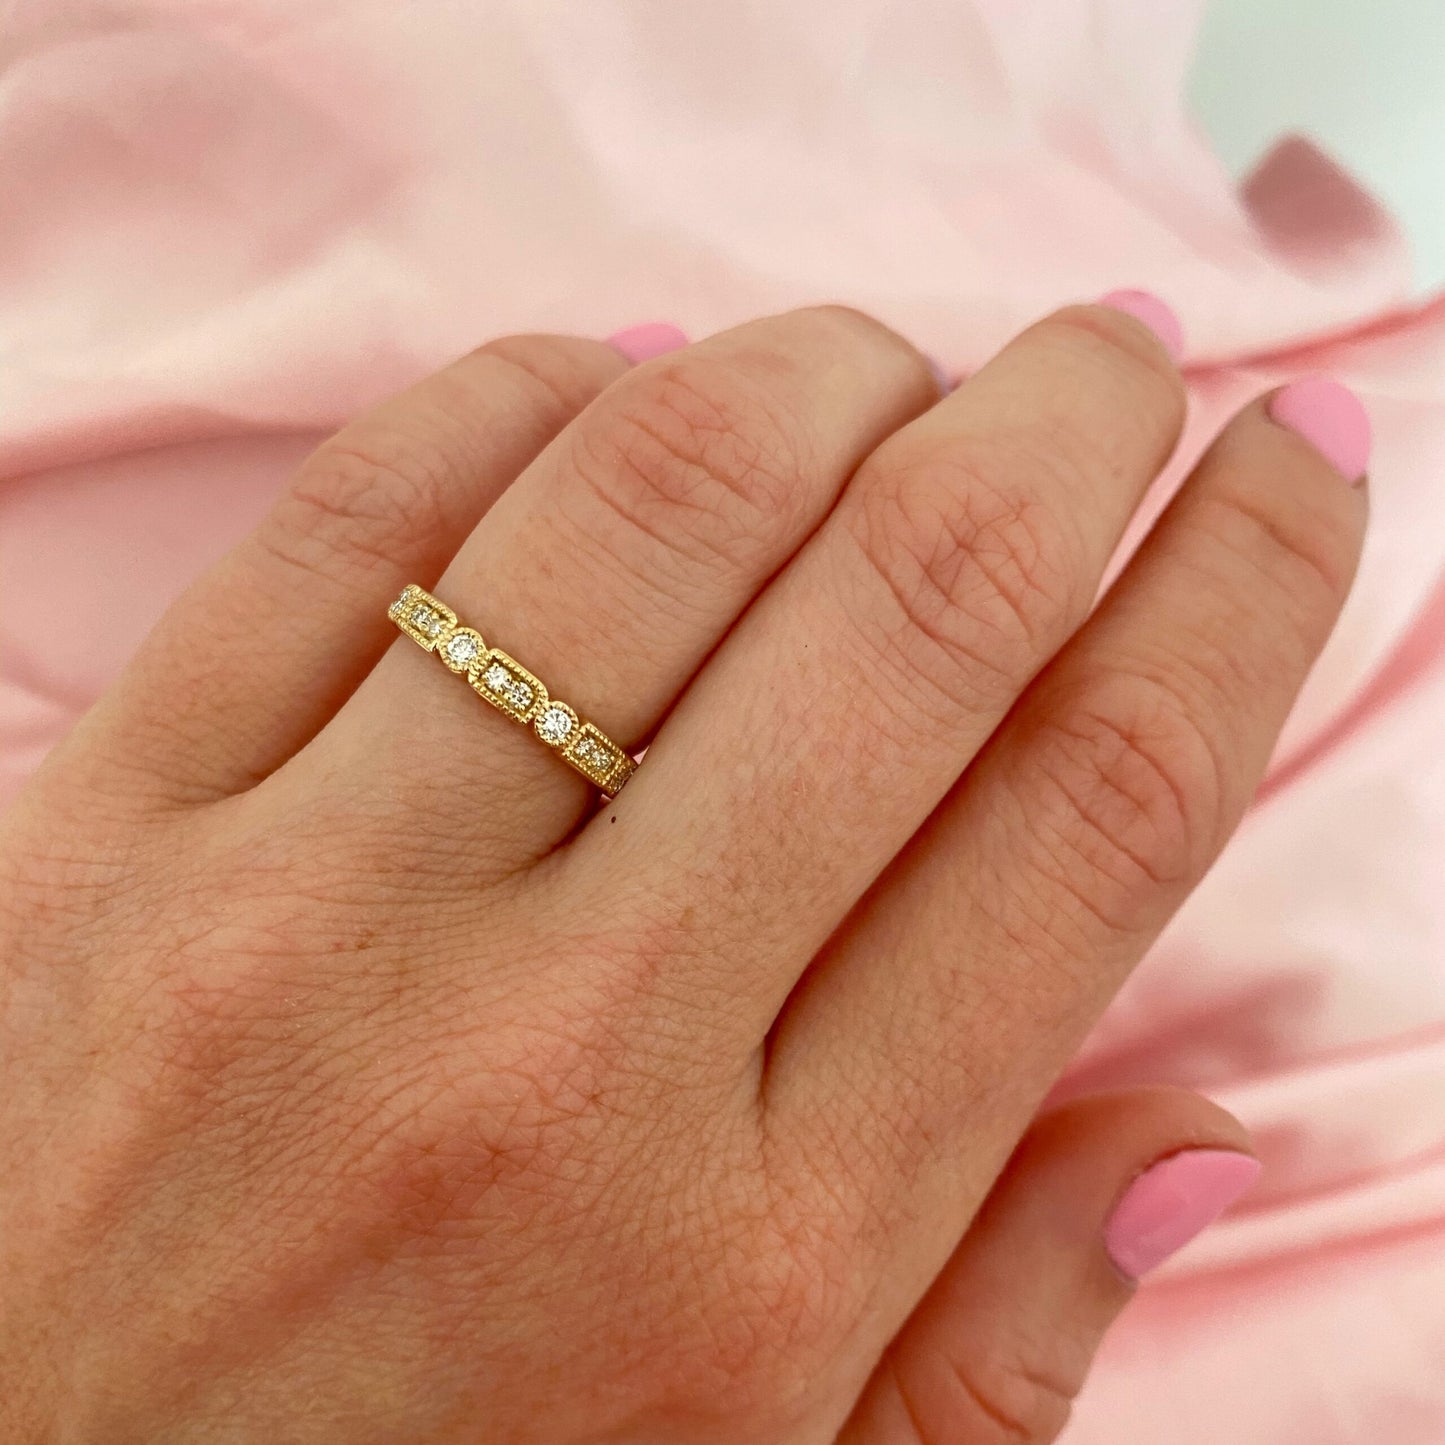 Trine JI Diamond Ring - 14 Karat Gold White Diamond